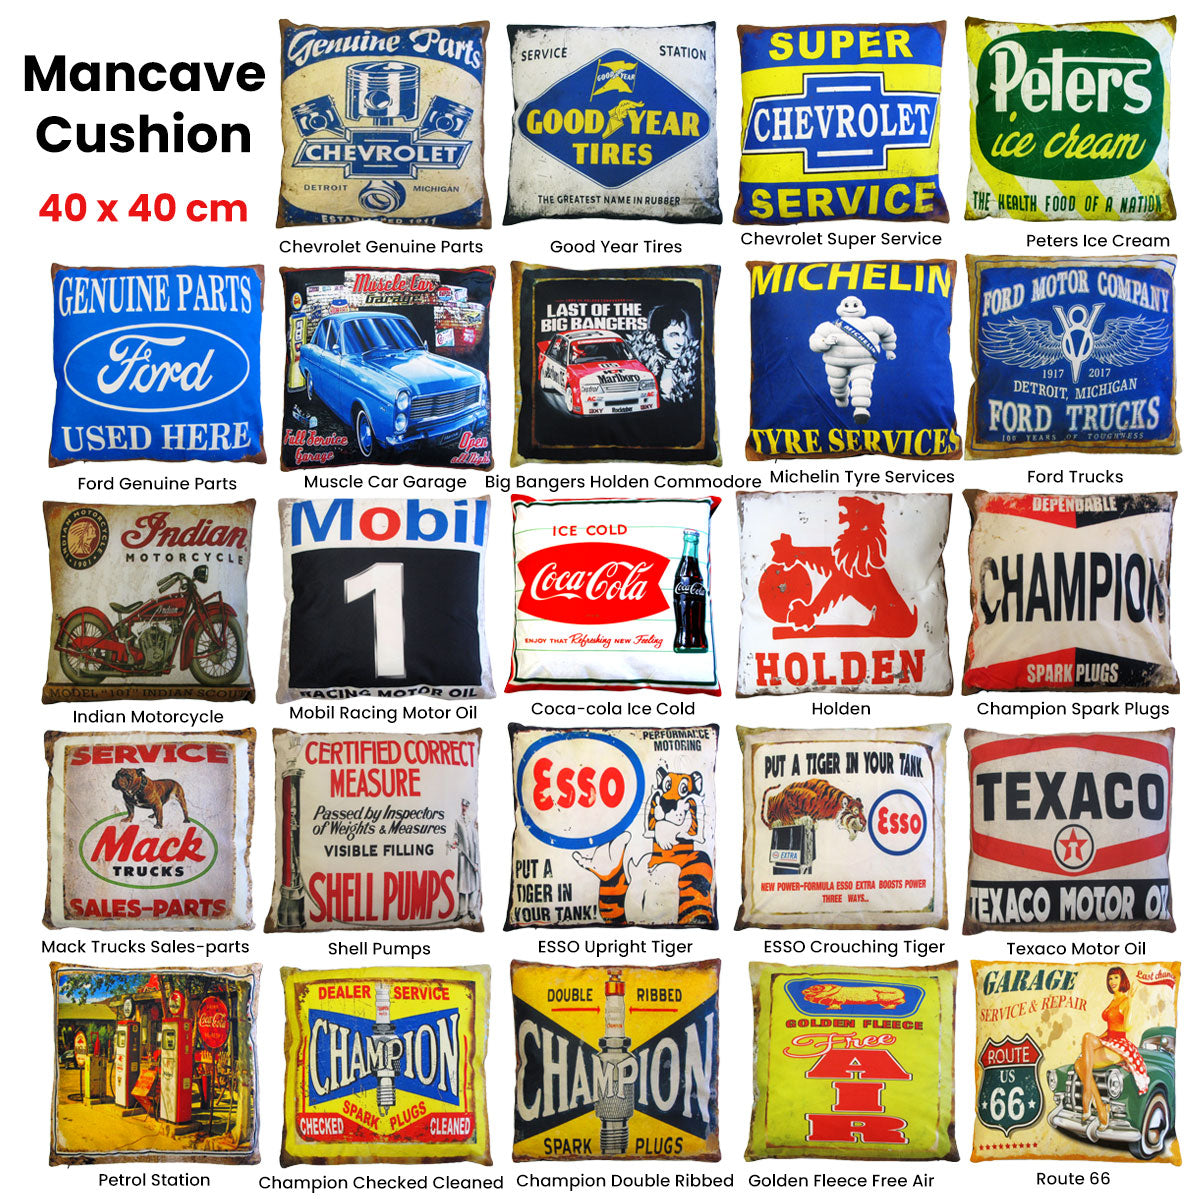 Australian Mancave Retro Cushion Texaco Motor Oil 40 x 40 cm - Cushion Covers - Zanlana Design and Home Decor